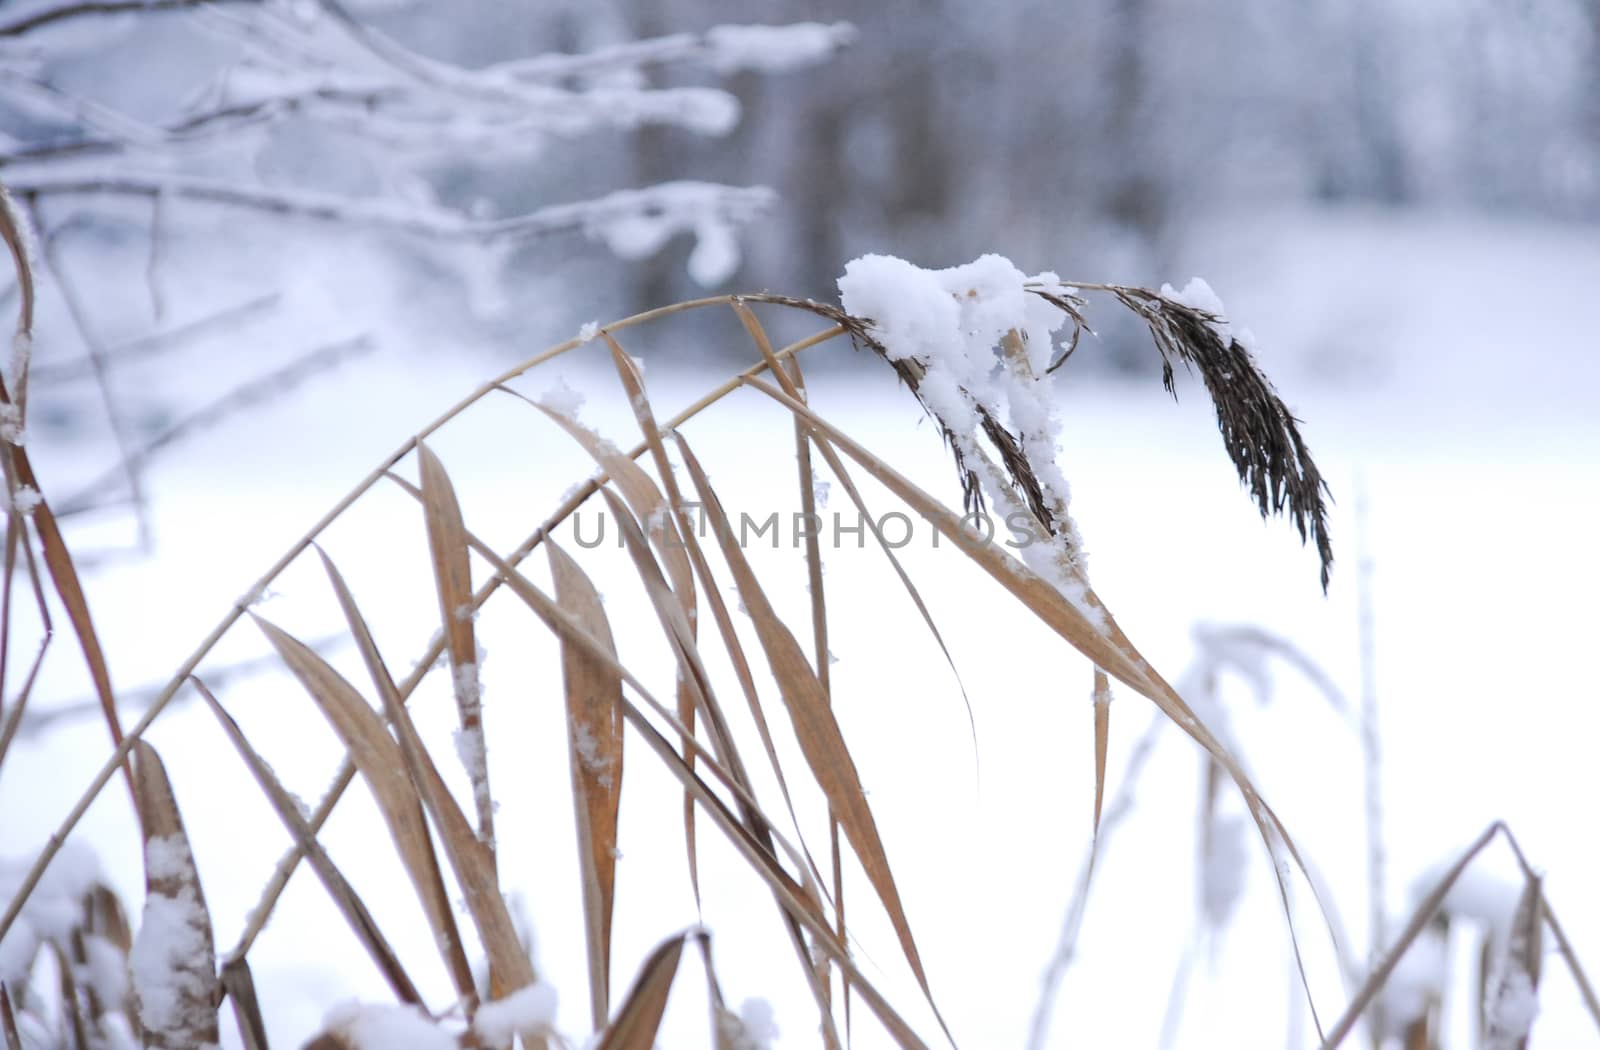 Snow on grass stalk blossom in winter white